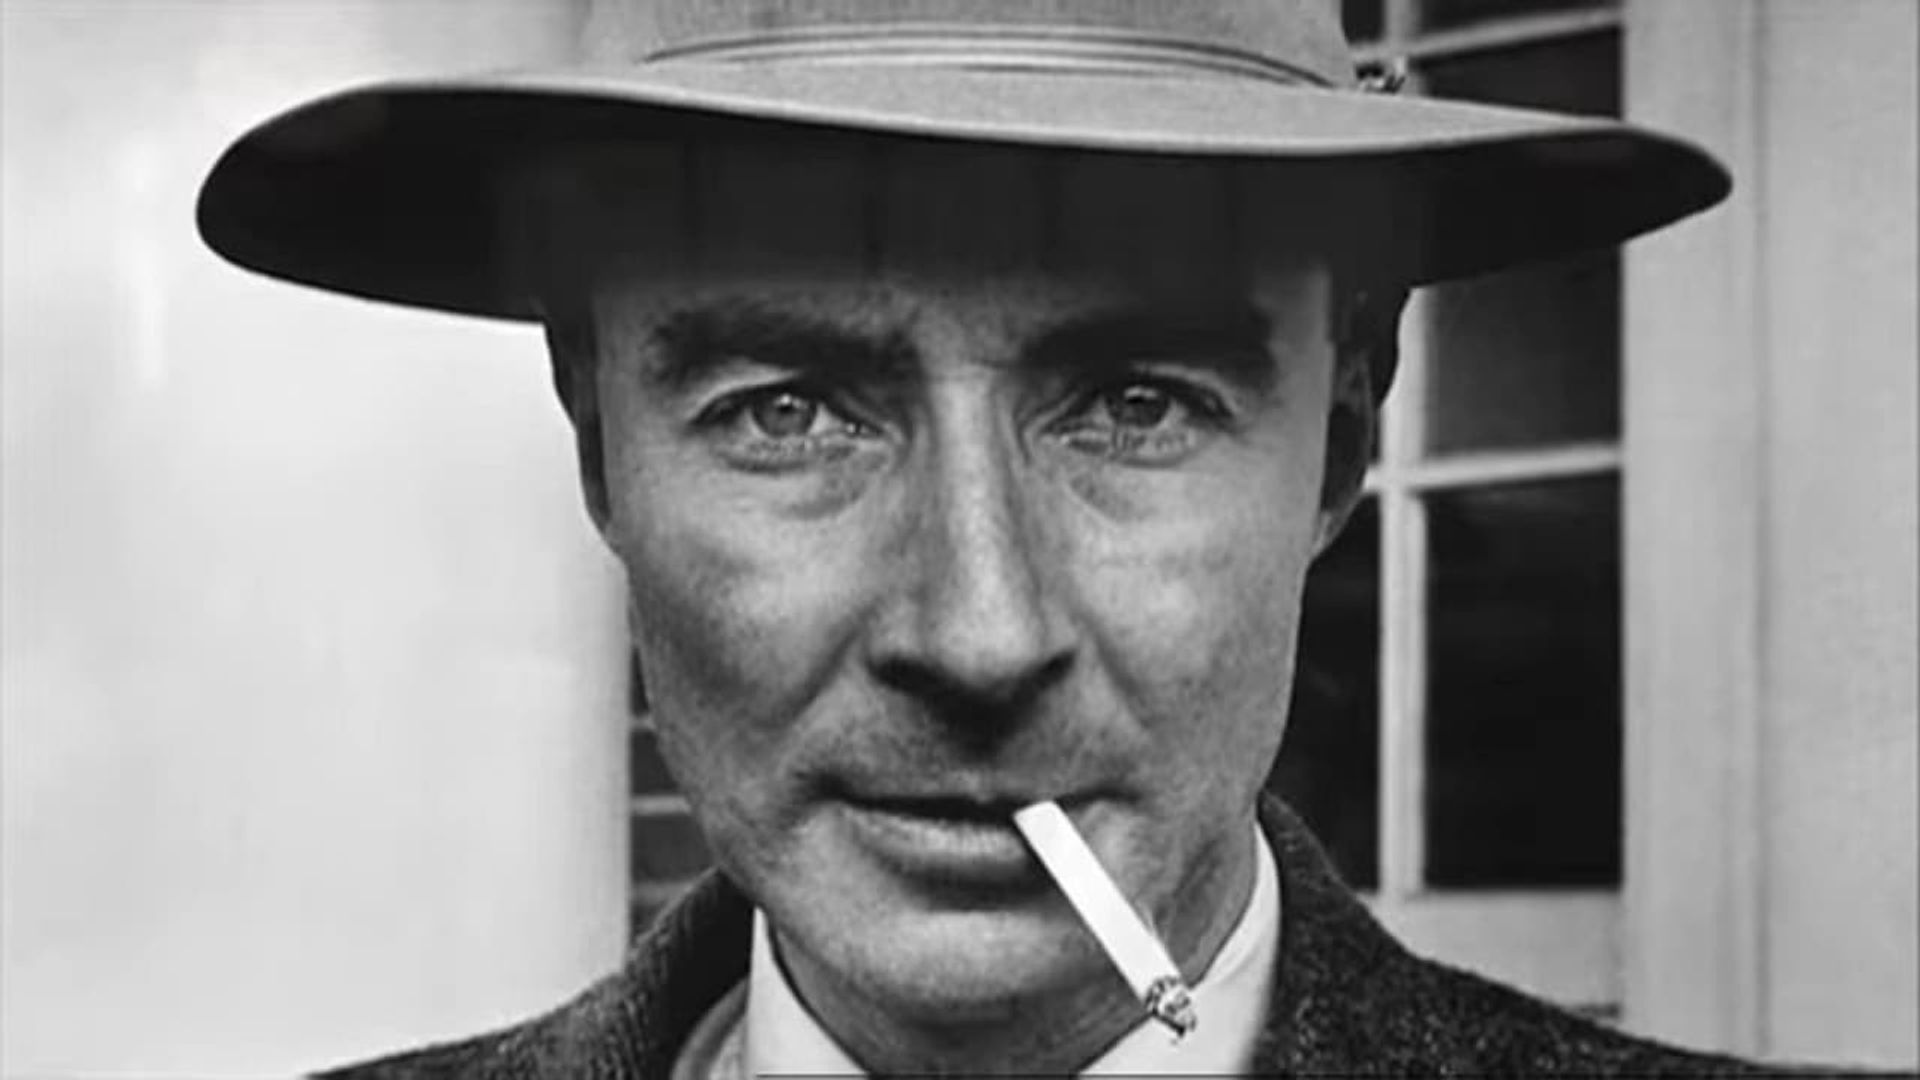 The Trials of J. Robert Oppenheimer background